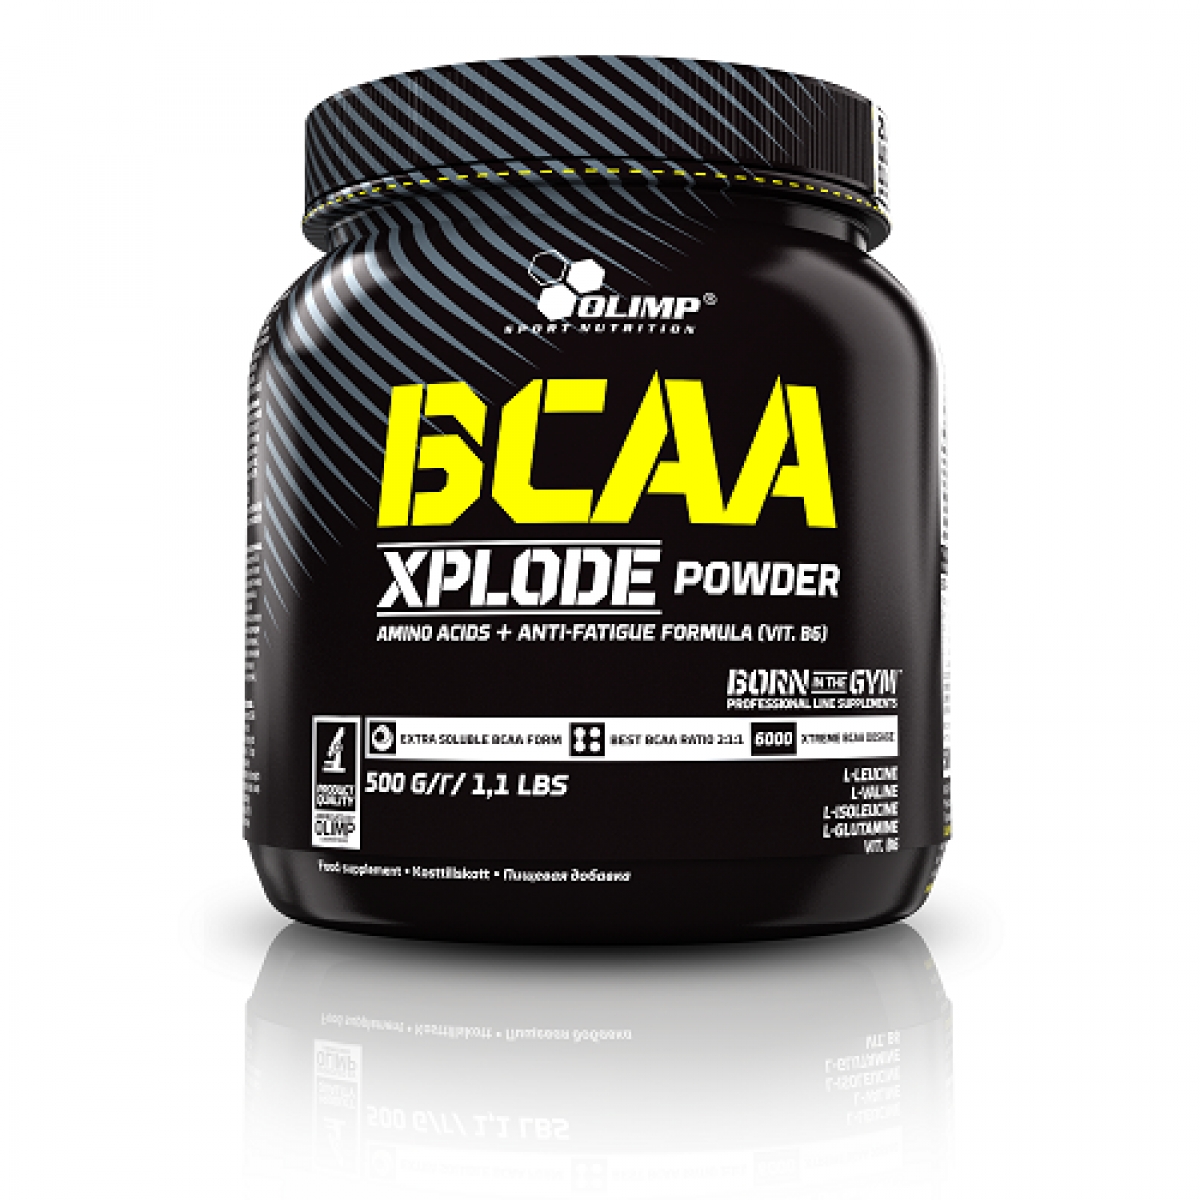 BCAA XPLODE POWDER, 500 Q